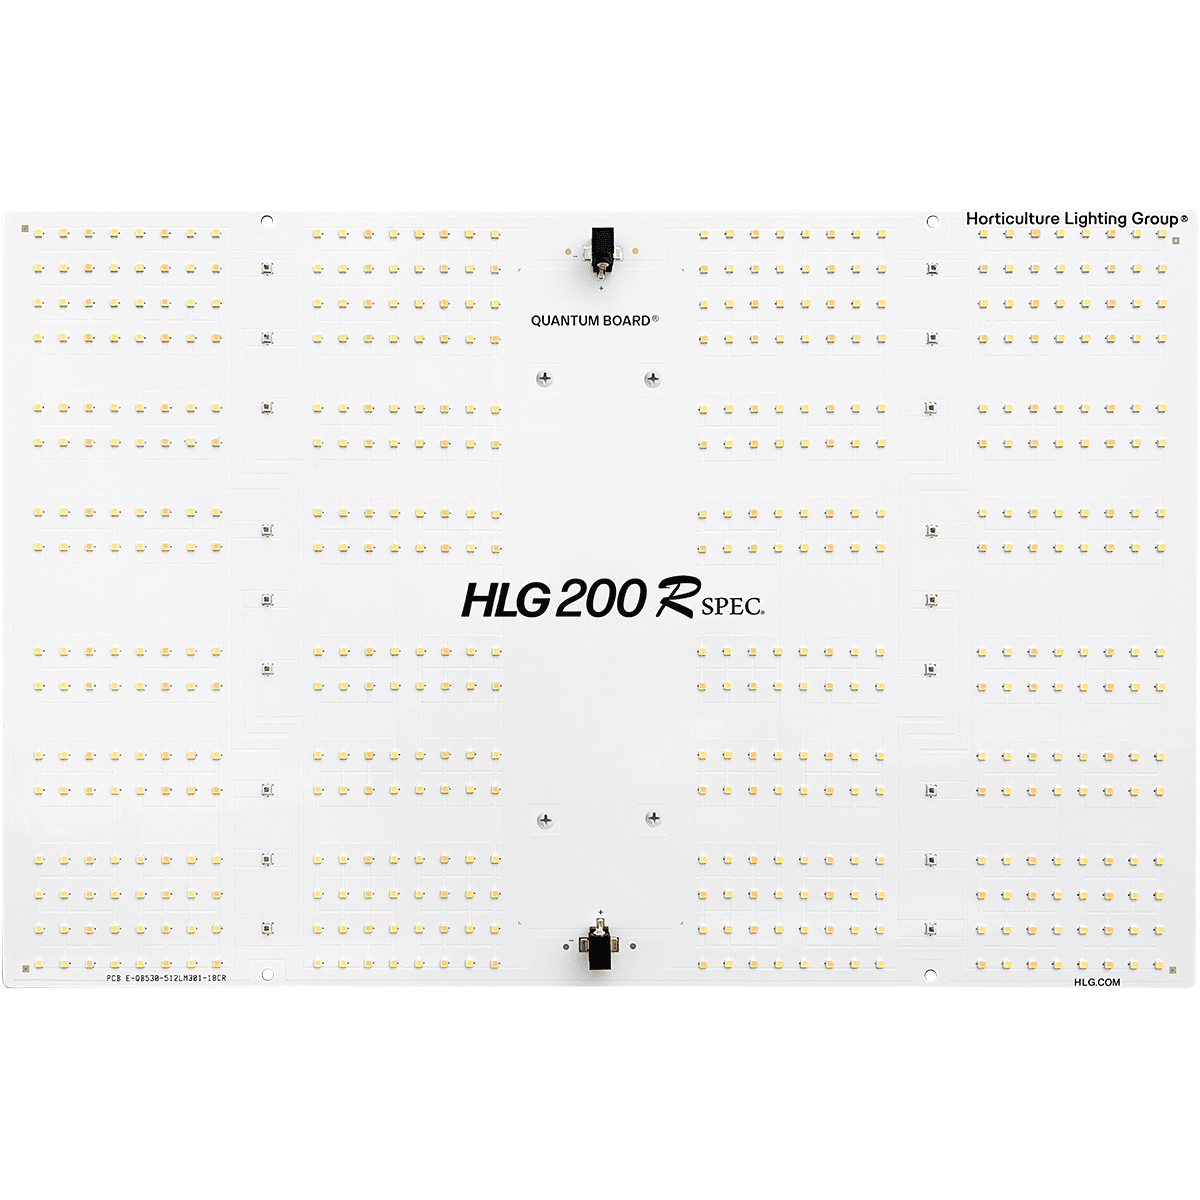 HLG 200 Rspec LED Grow Light